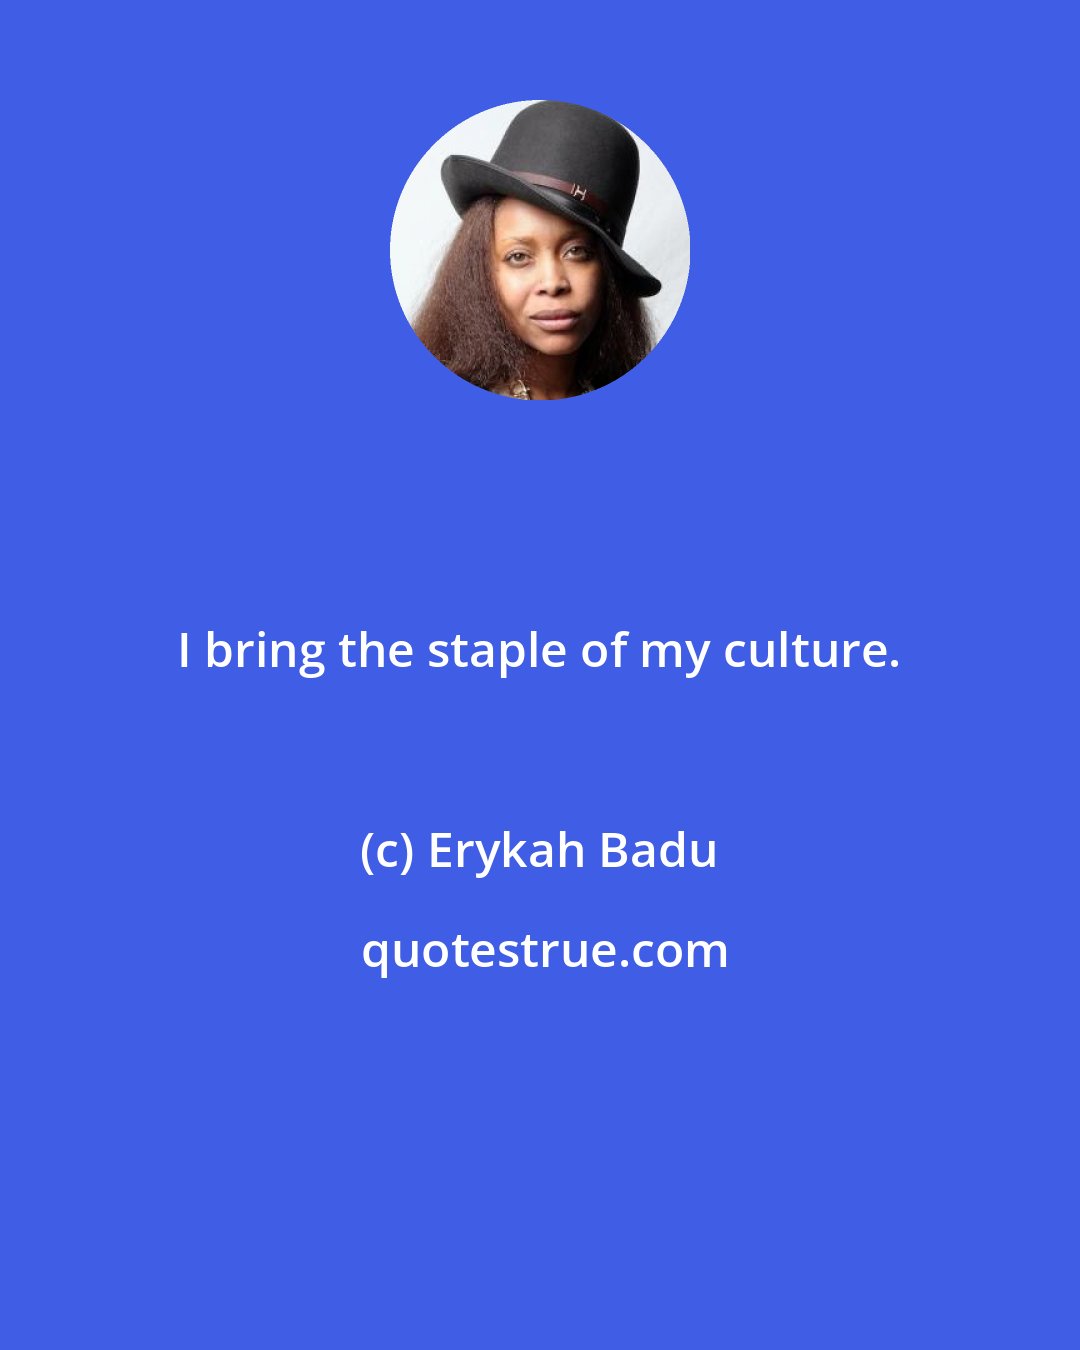 Erykah Badu: I bring the staple of my culture.